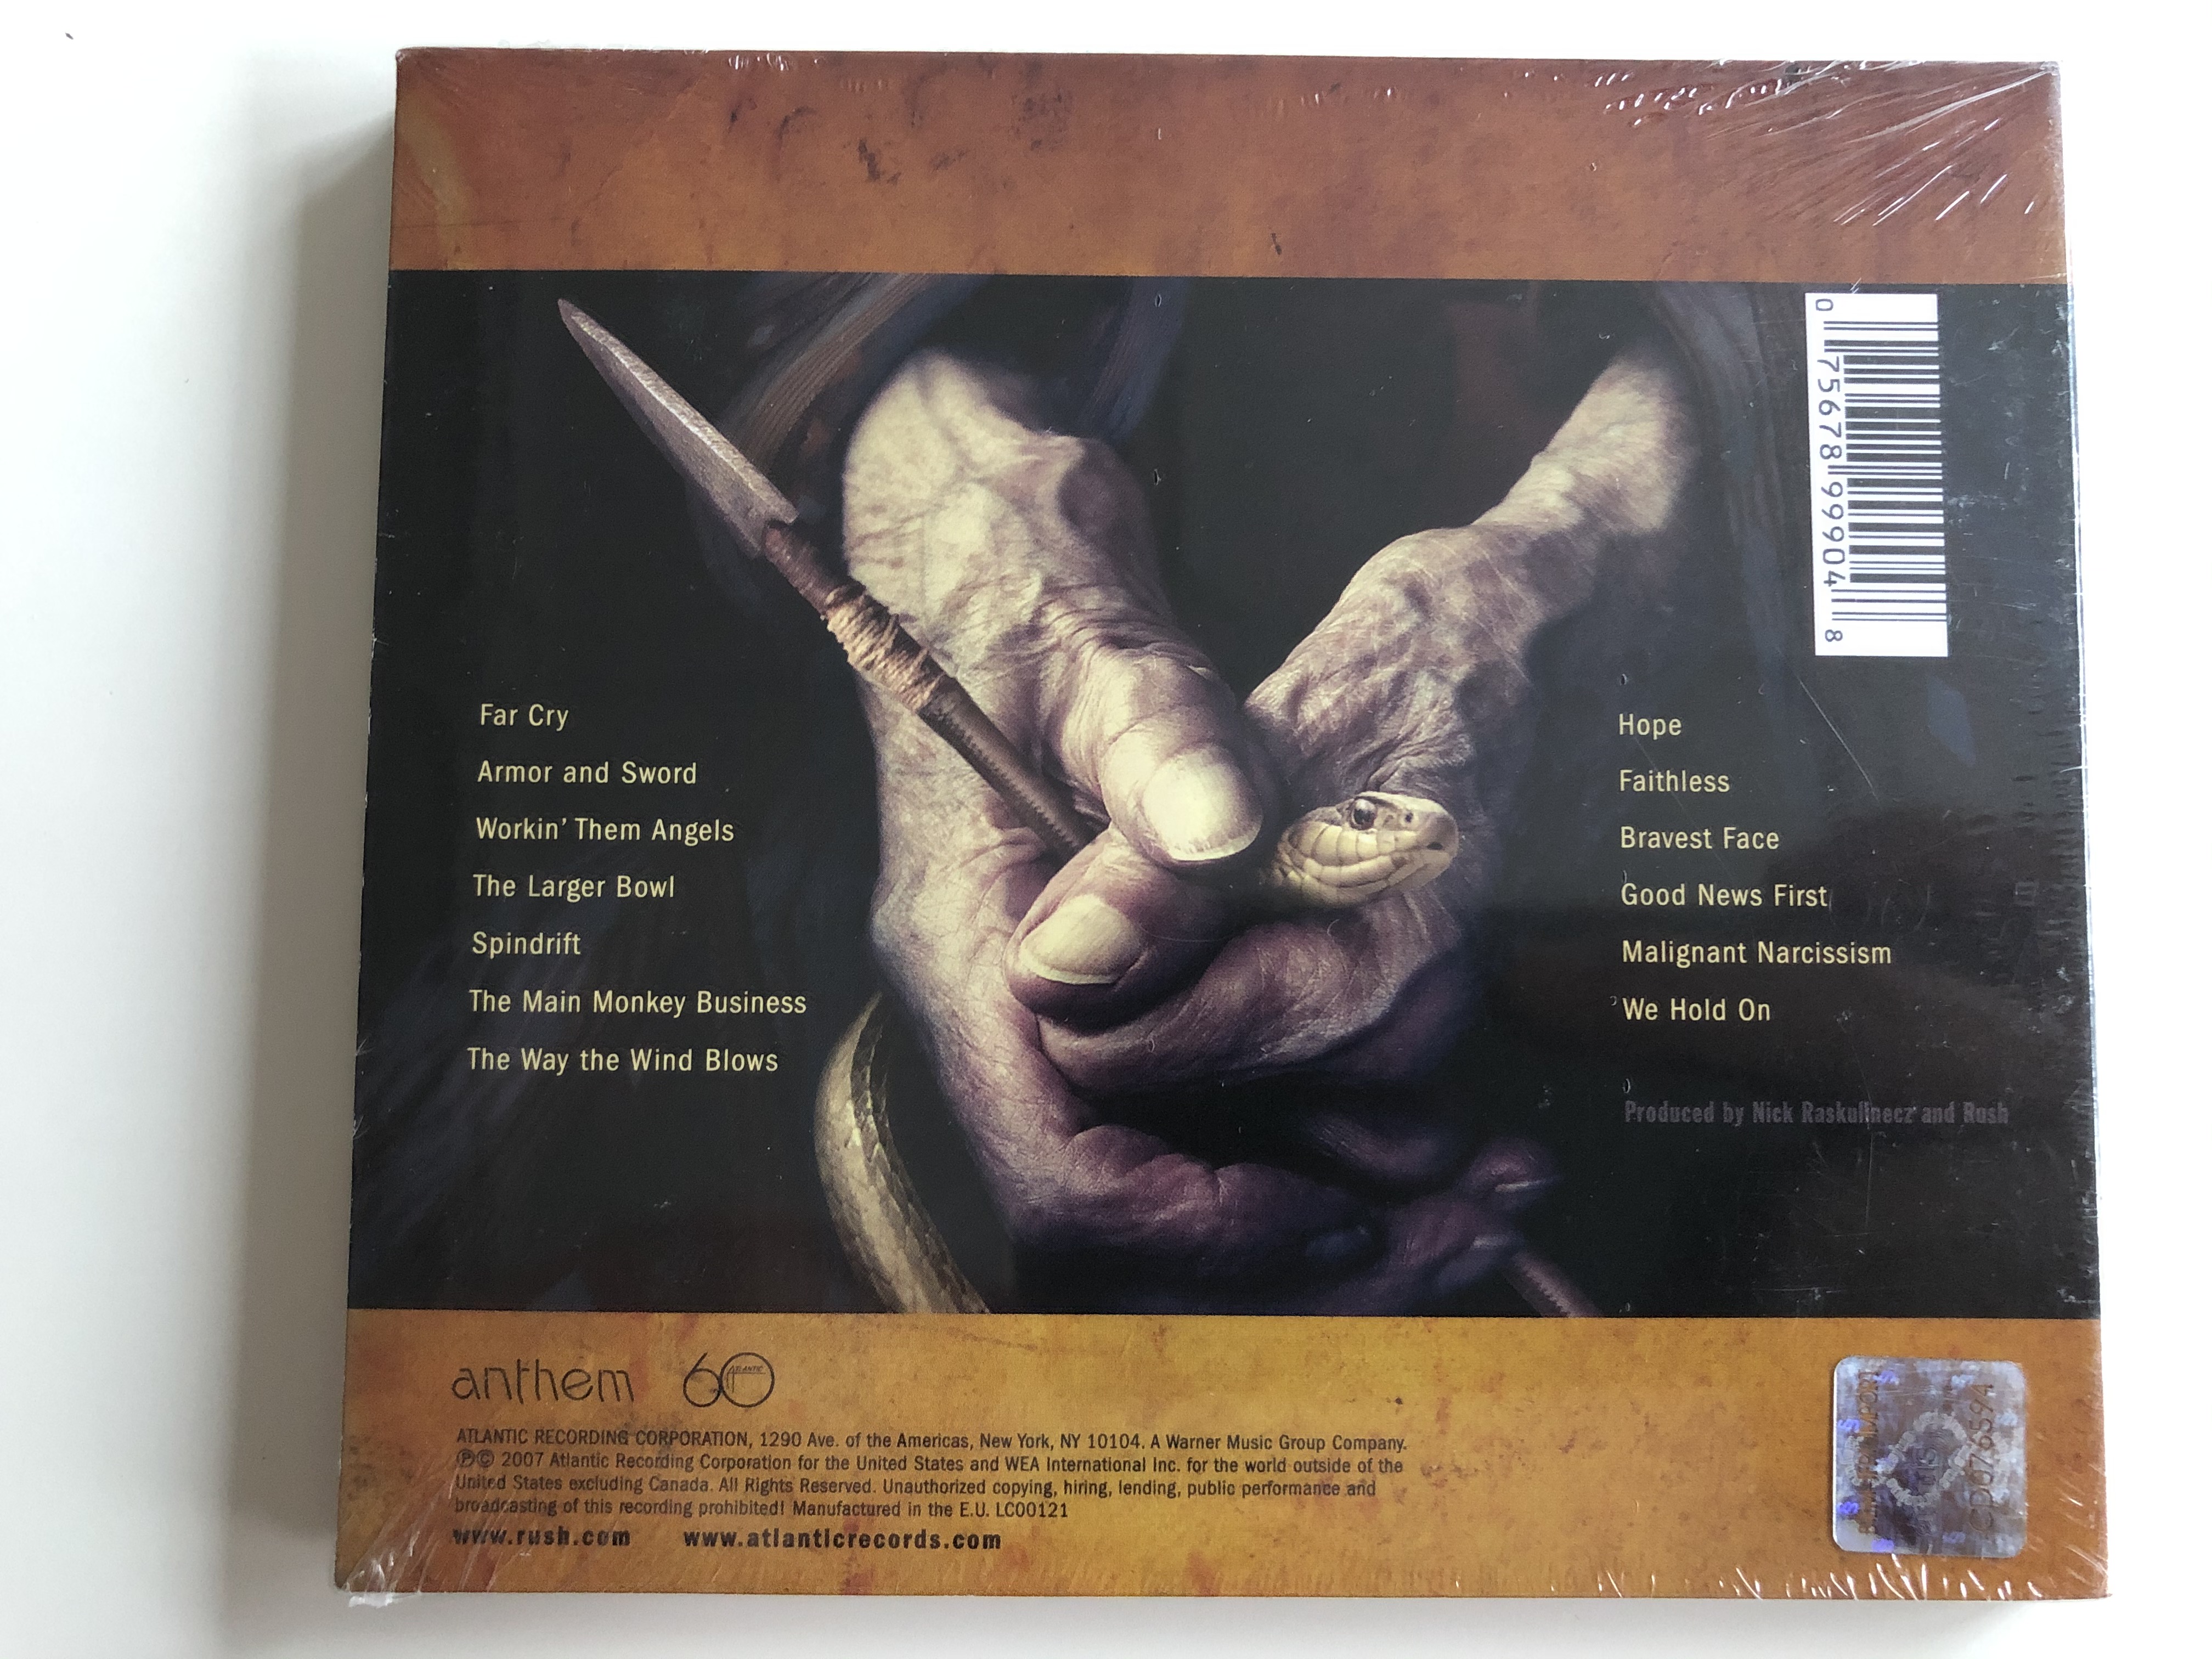 rush-snakes-arrows-featuring-far-cry-on-tour-all-summer-atlantic-audio-cd-2007-7567-89990-4-2-.jpg